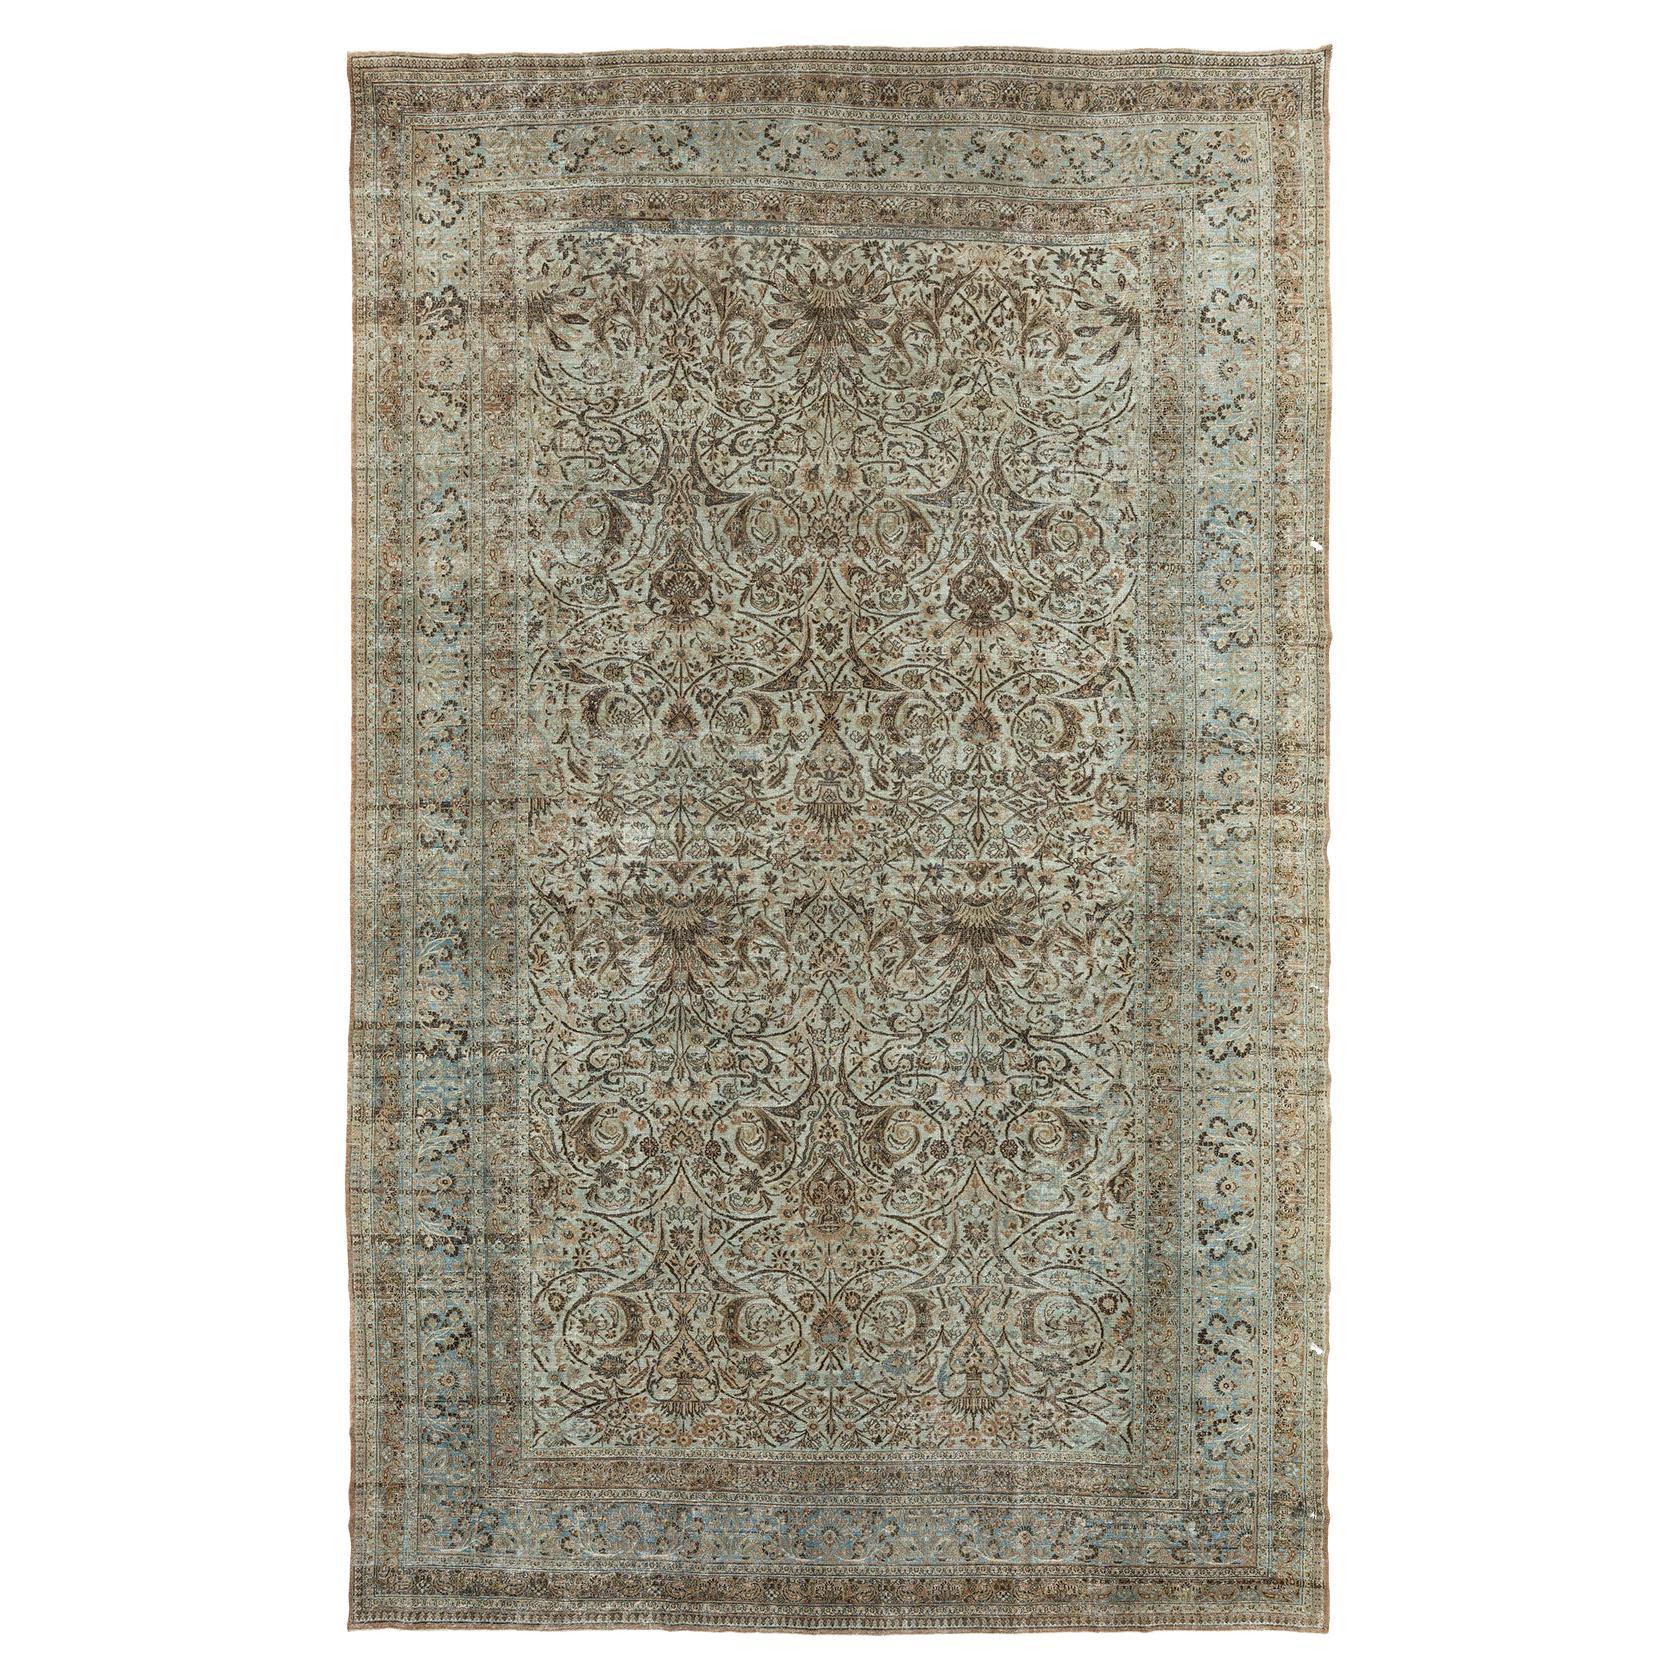 Zabihi Collection Antique Worn Persian Oversize Carpet